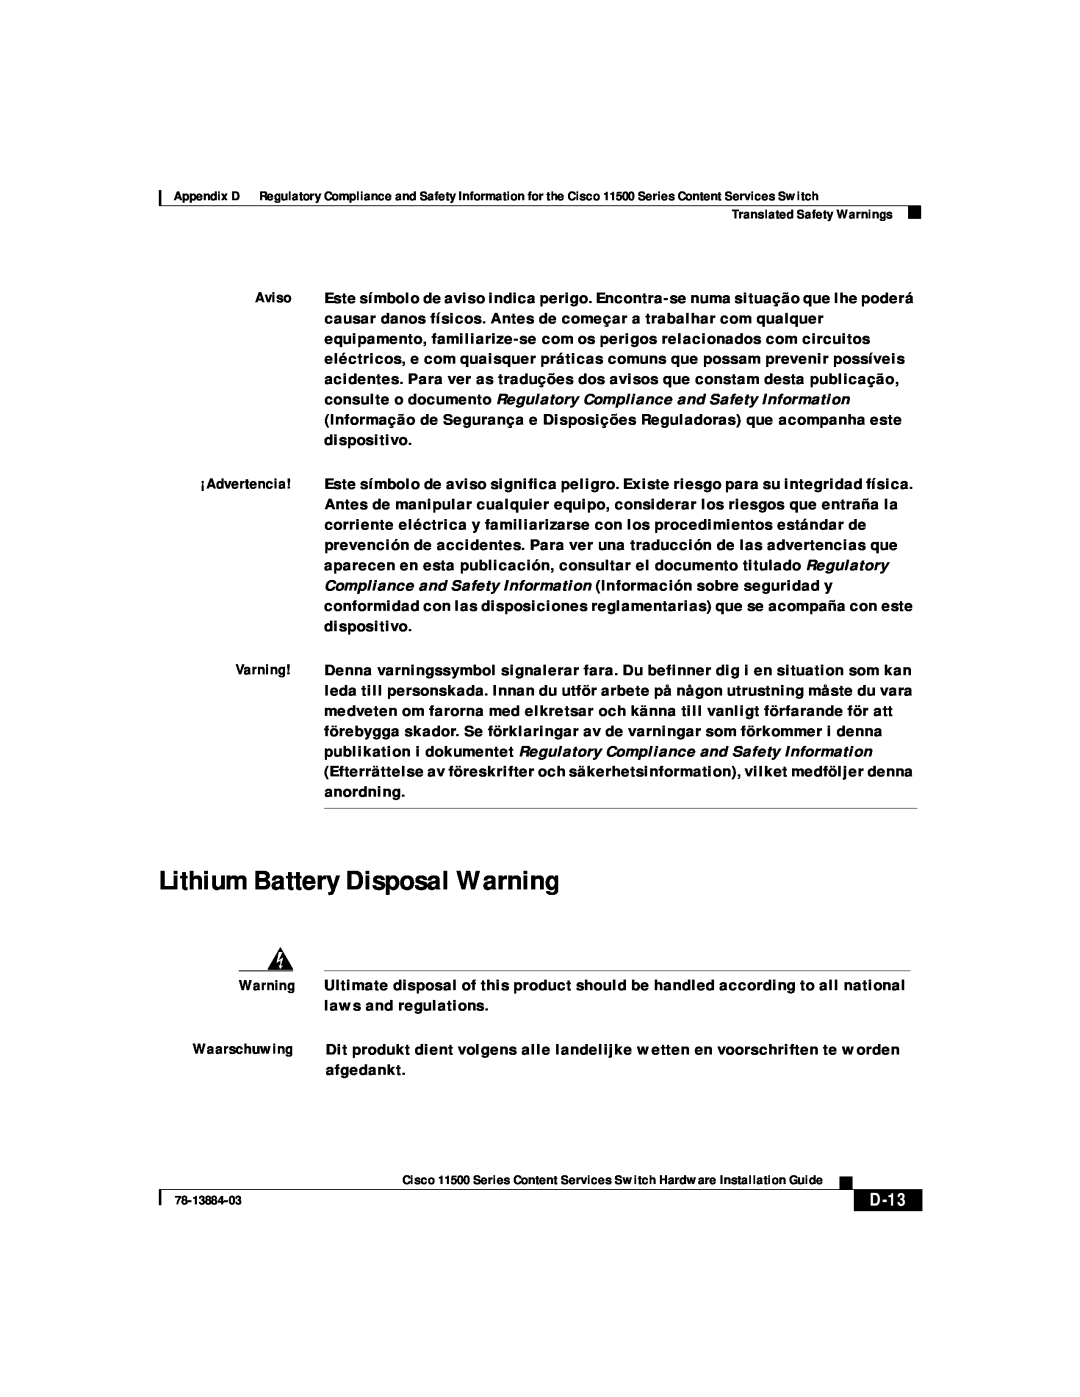 Cisco Systems 11500 Series manual Lithium Battery Disposal Warning, D-13 